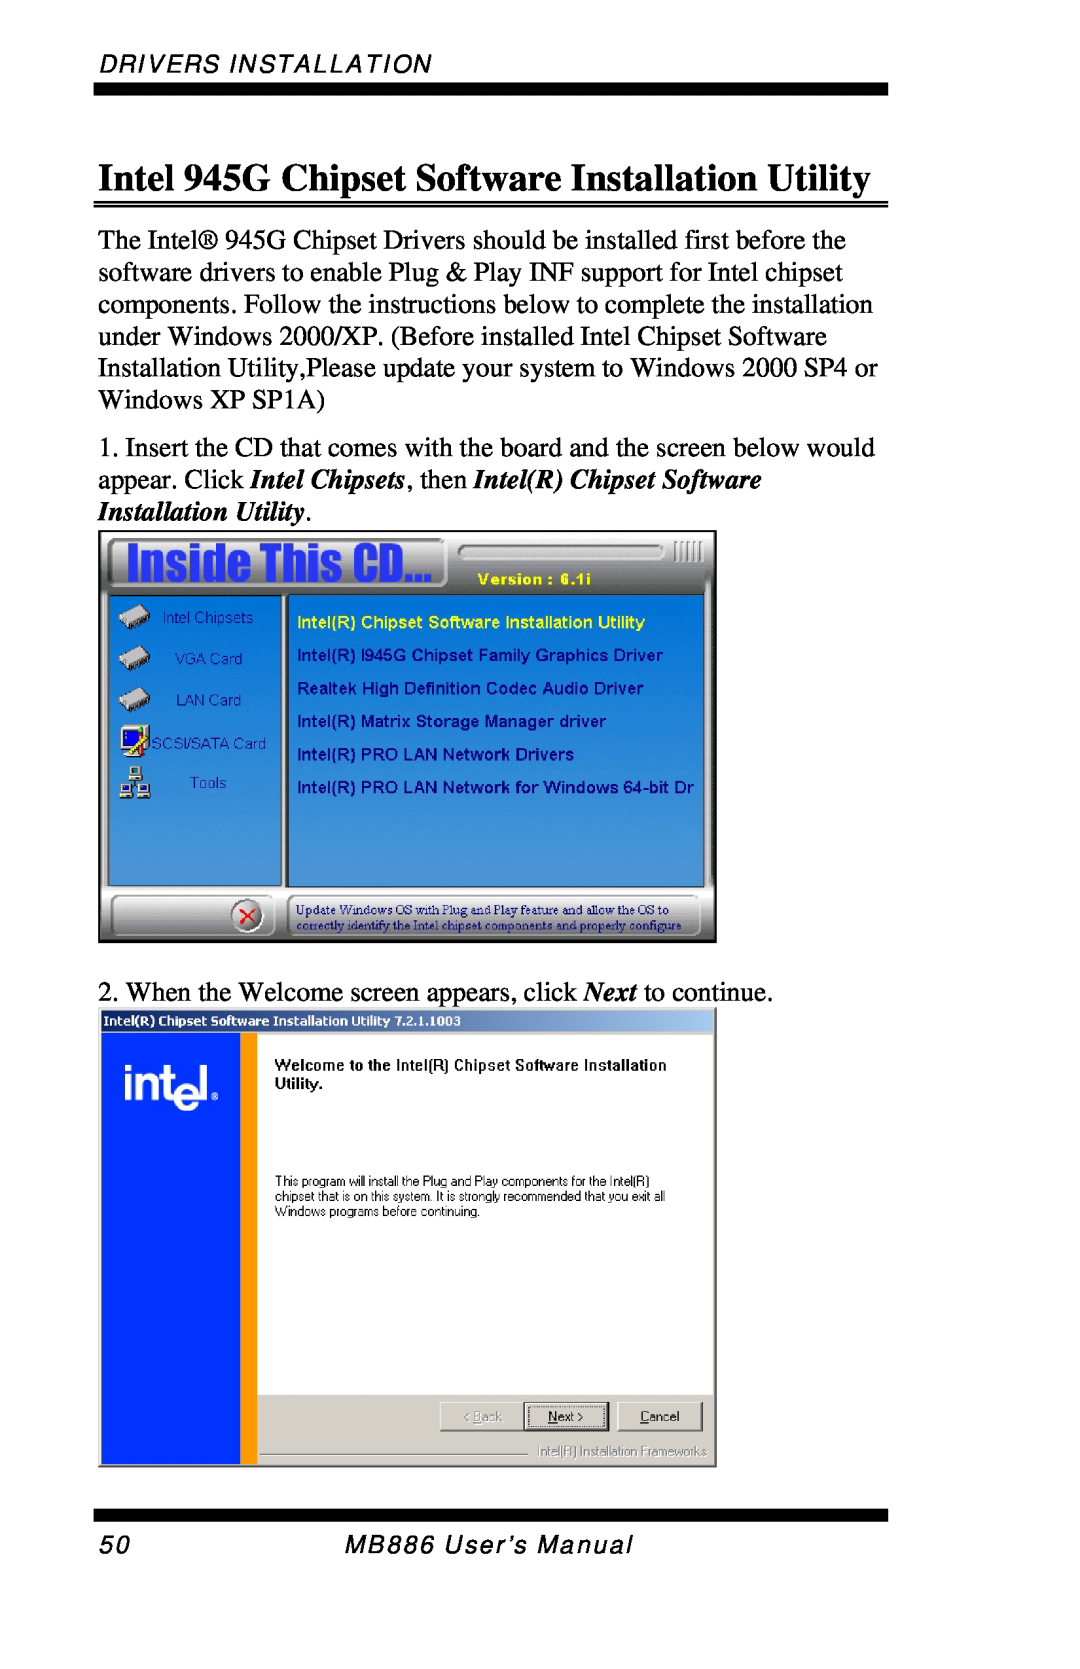 Intel MB886 user manual Intel 945G Chipset Software Installation Utility, Drivers Installation 